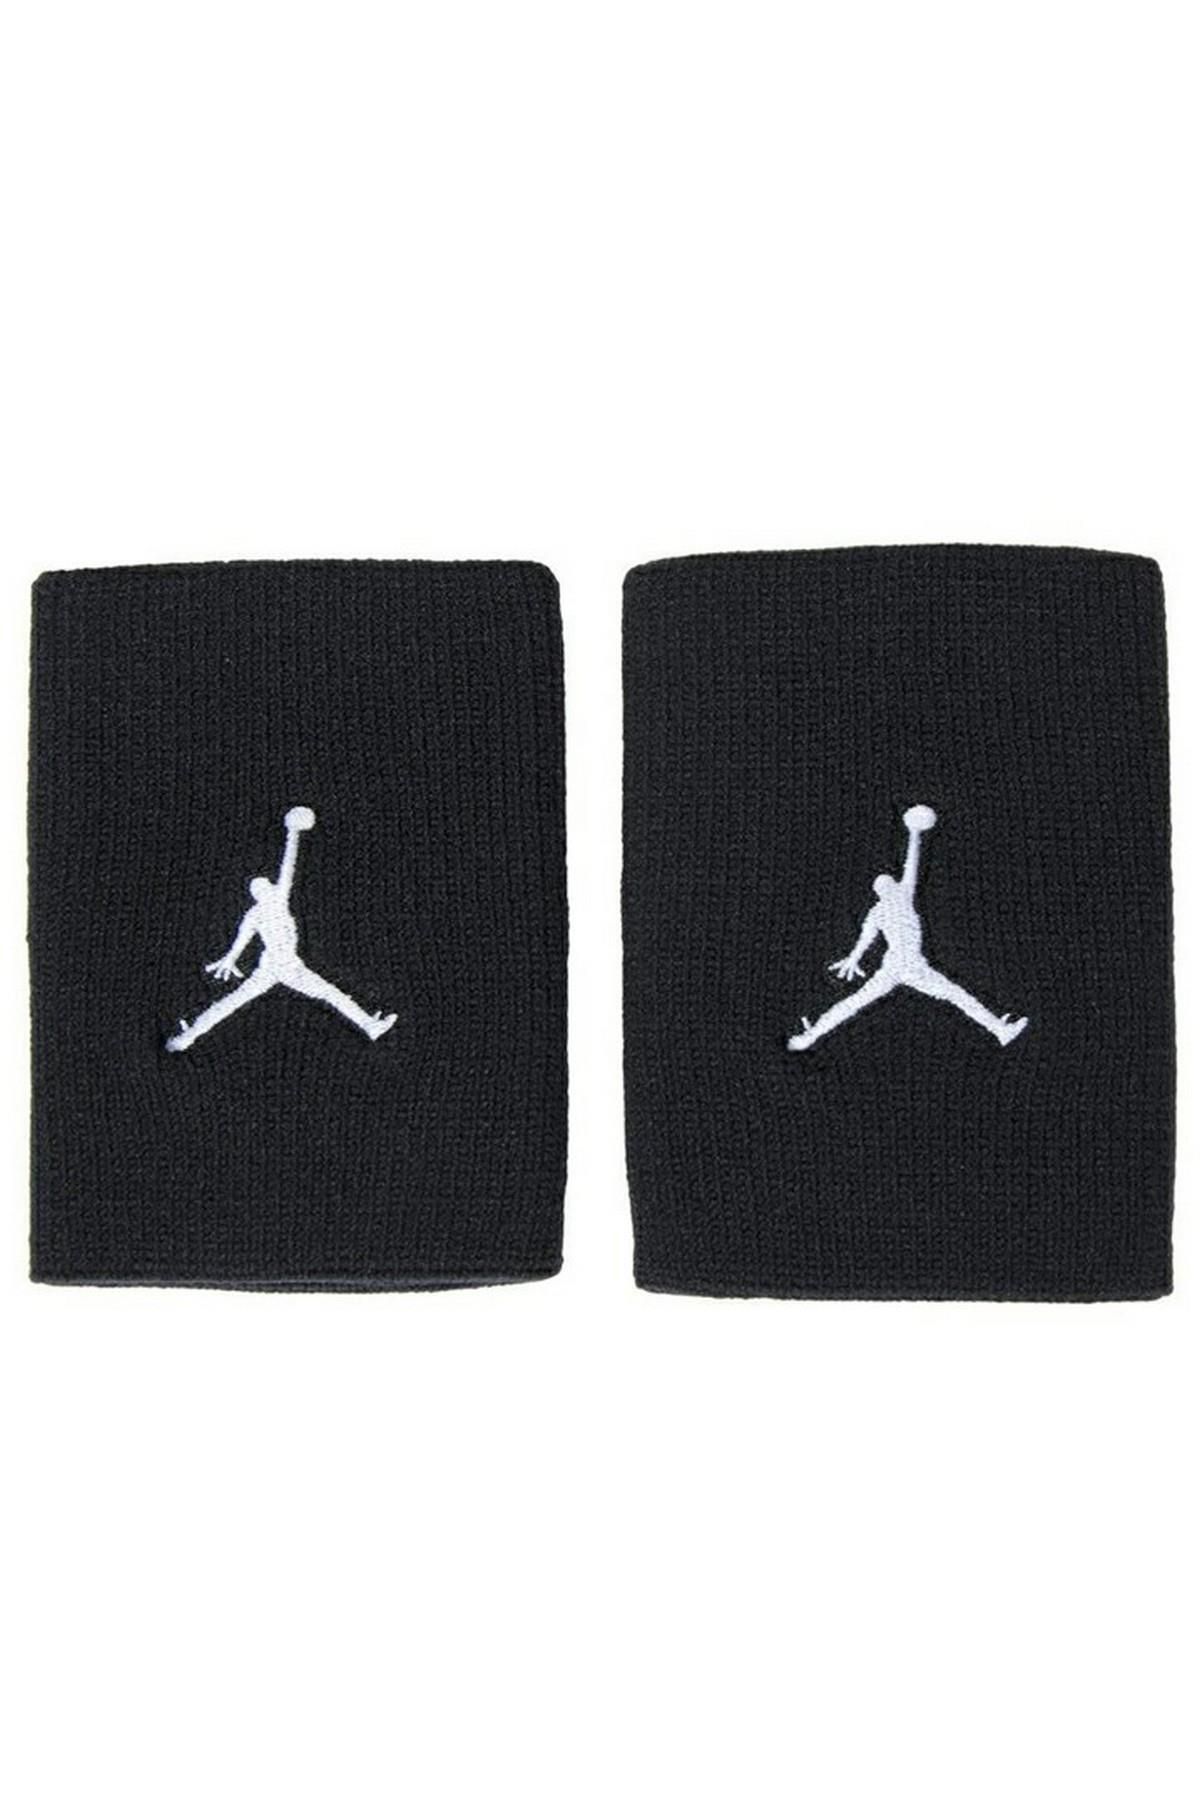 Nike Unisex Bileklik Kol Bandı Jordan Jumpman Wristbands Black/White